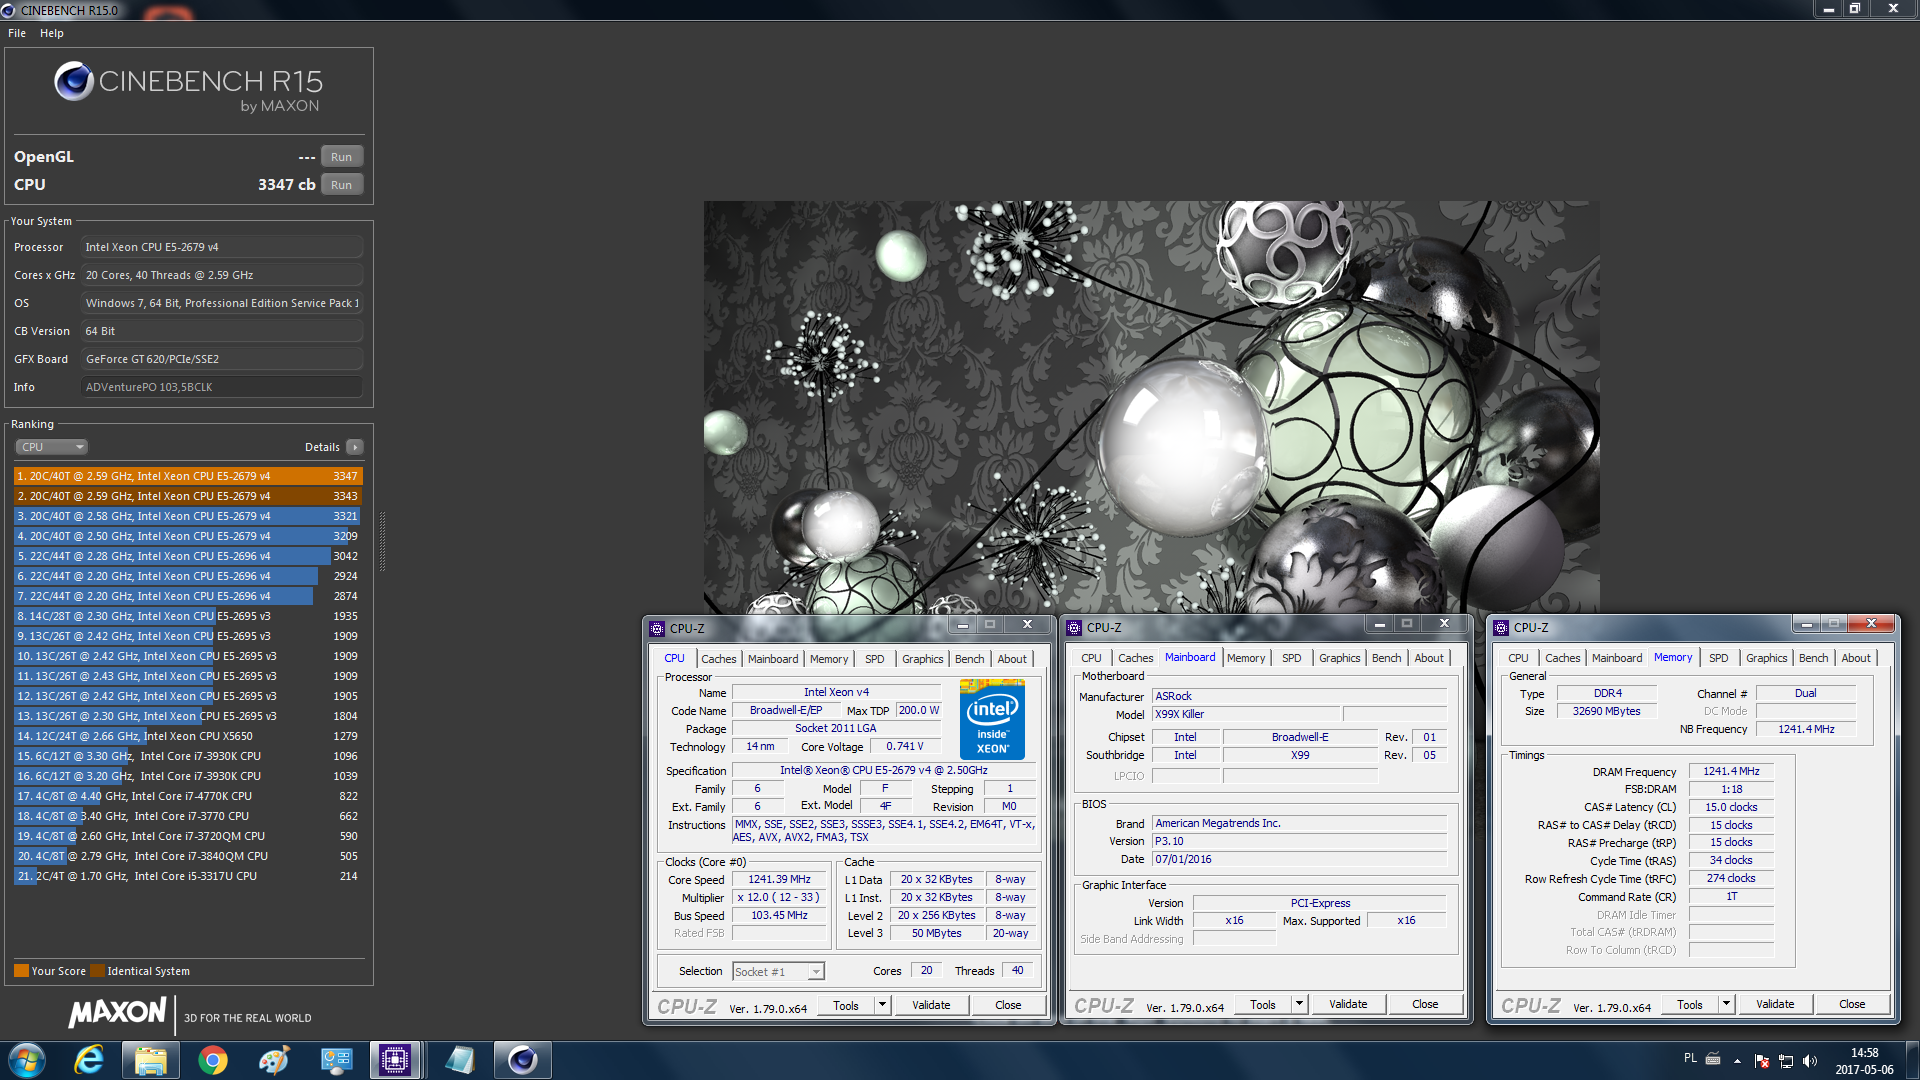 ADVenturePO`s Cinebench - R15 score: 3347 cb with a Xeon E5 2679 v4